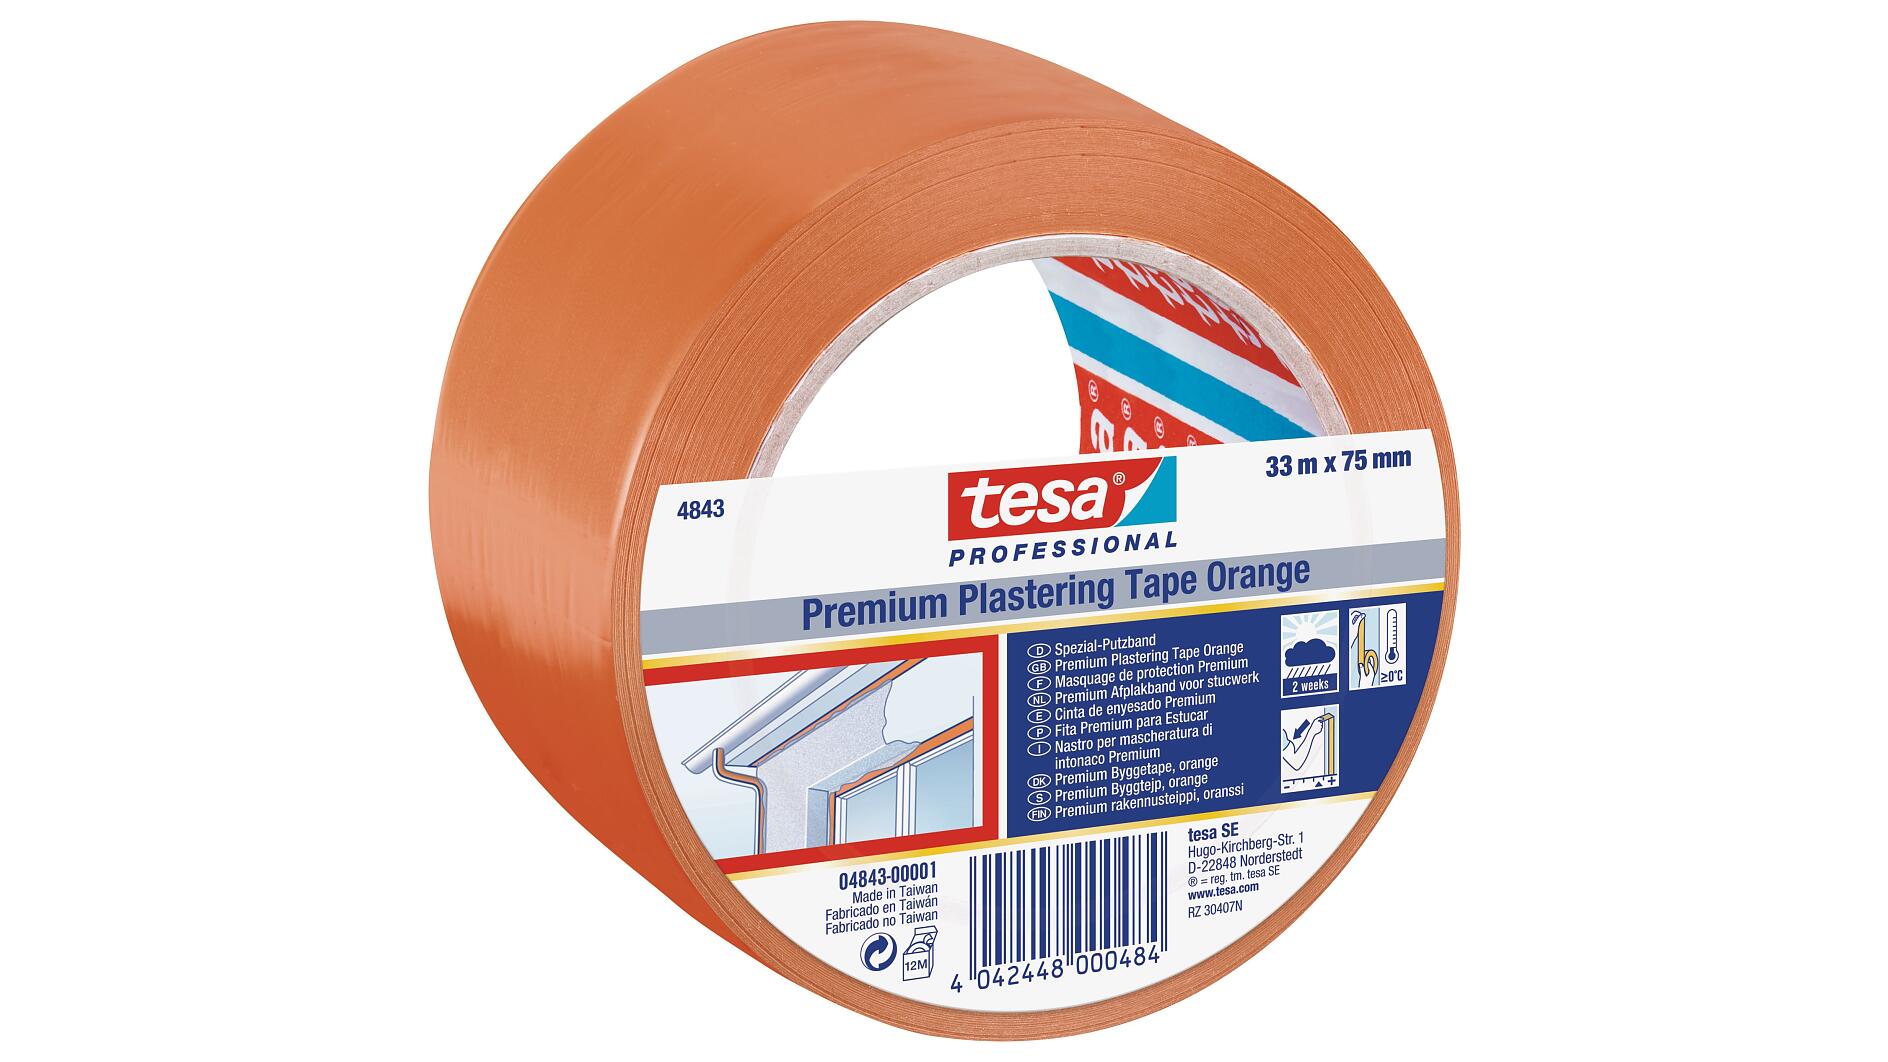 RS PRO Orange Masking Tape 50mm x 33m